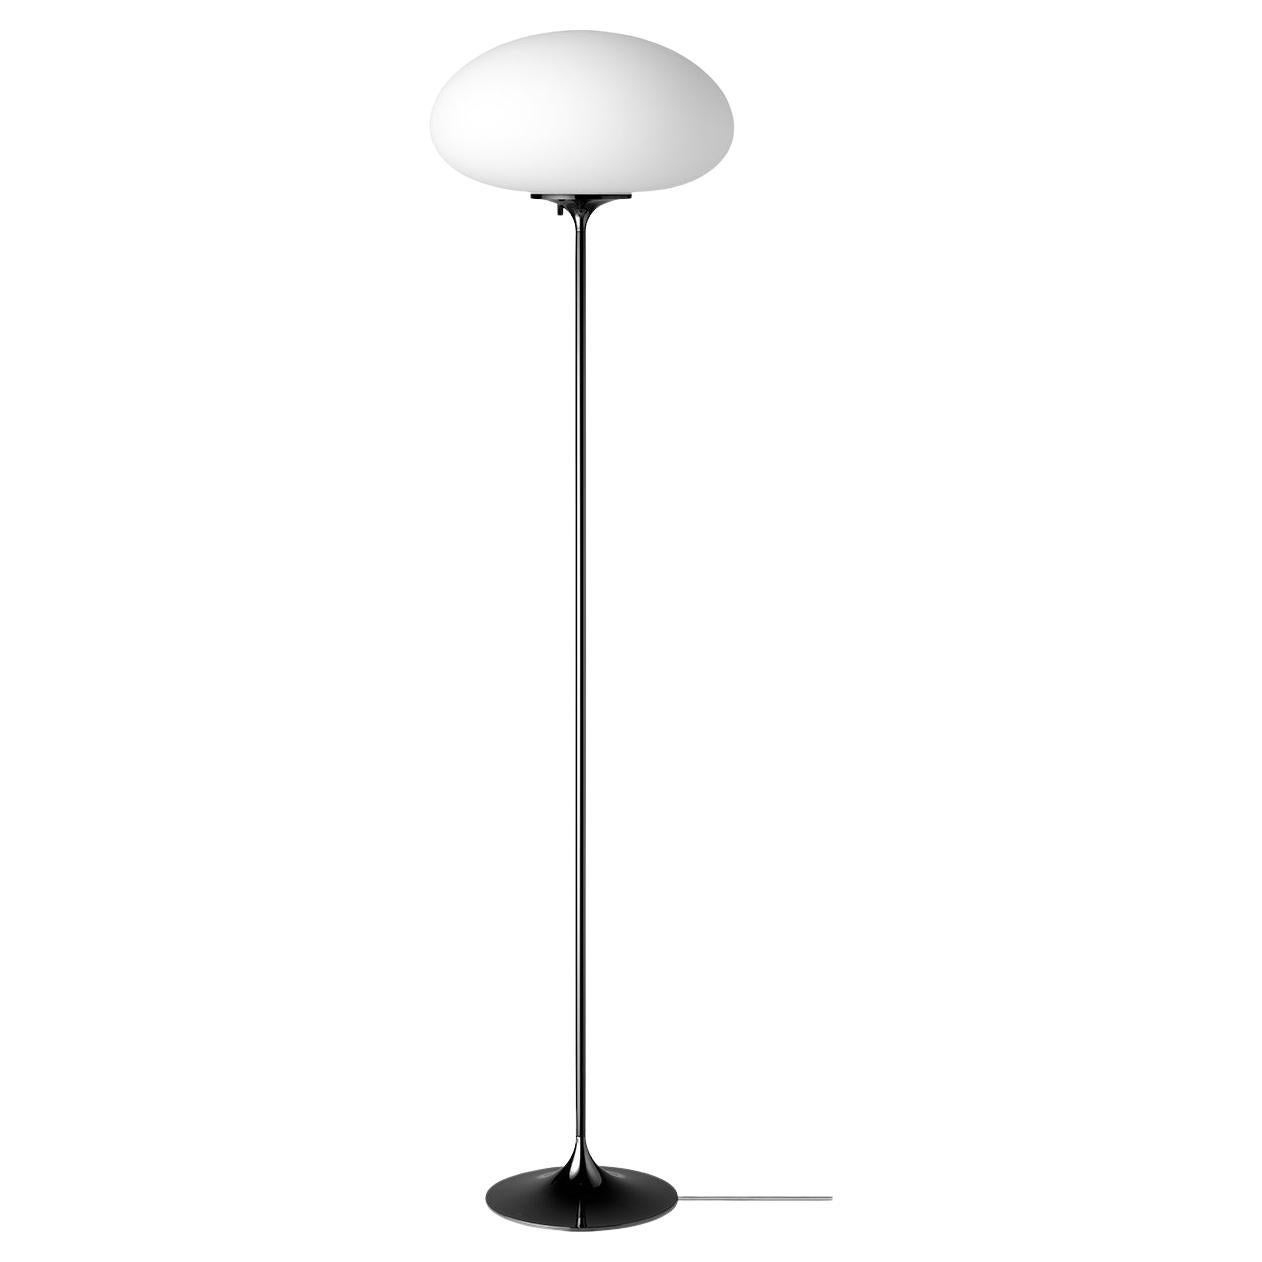 Stemlite Floor Lamp, H150, Frosted Glass, Black Chrome